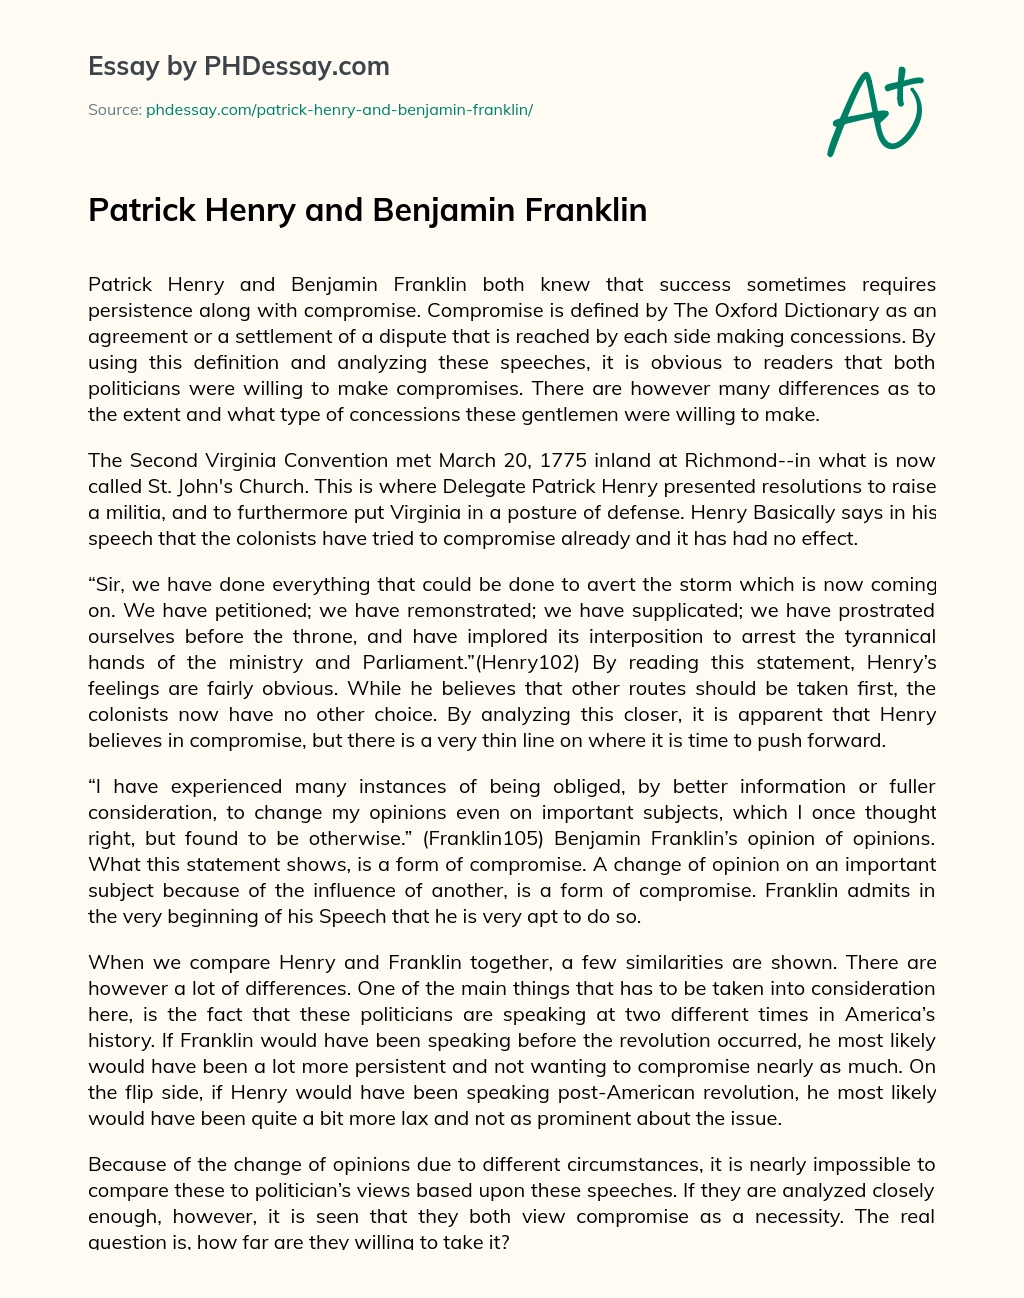 Patrick Henry and Benjamin Franklin essay